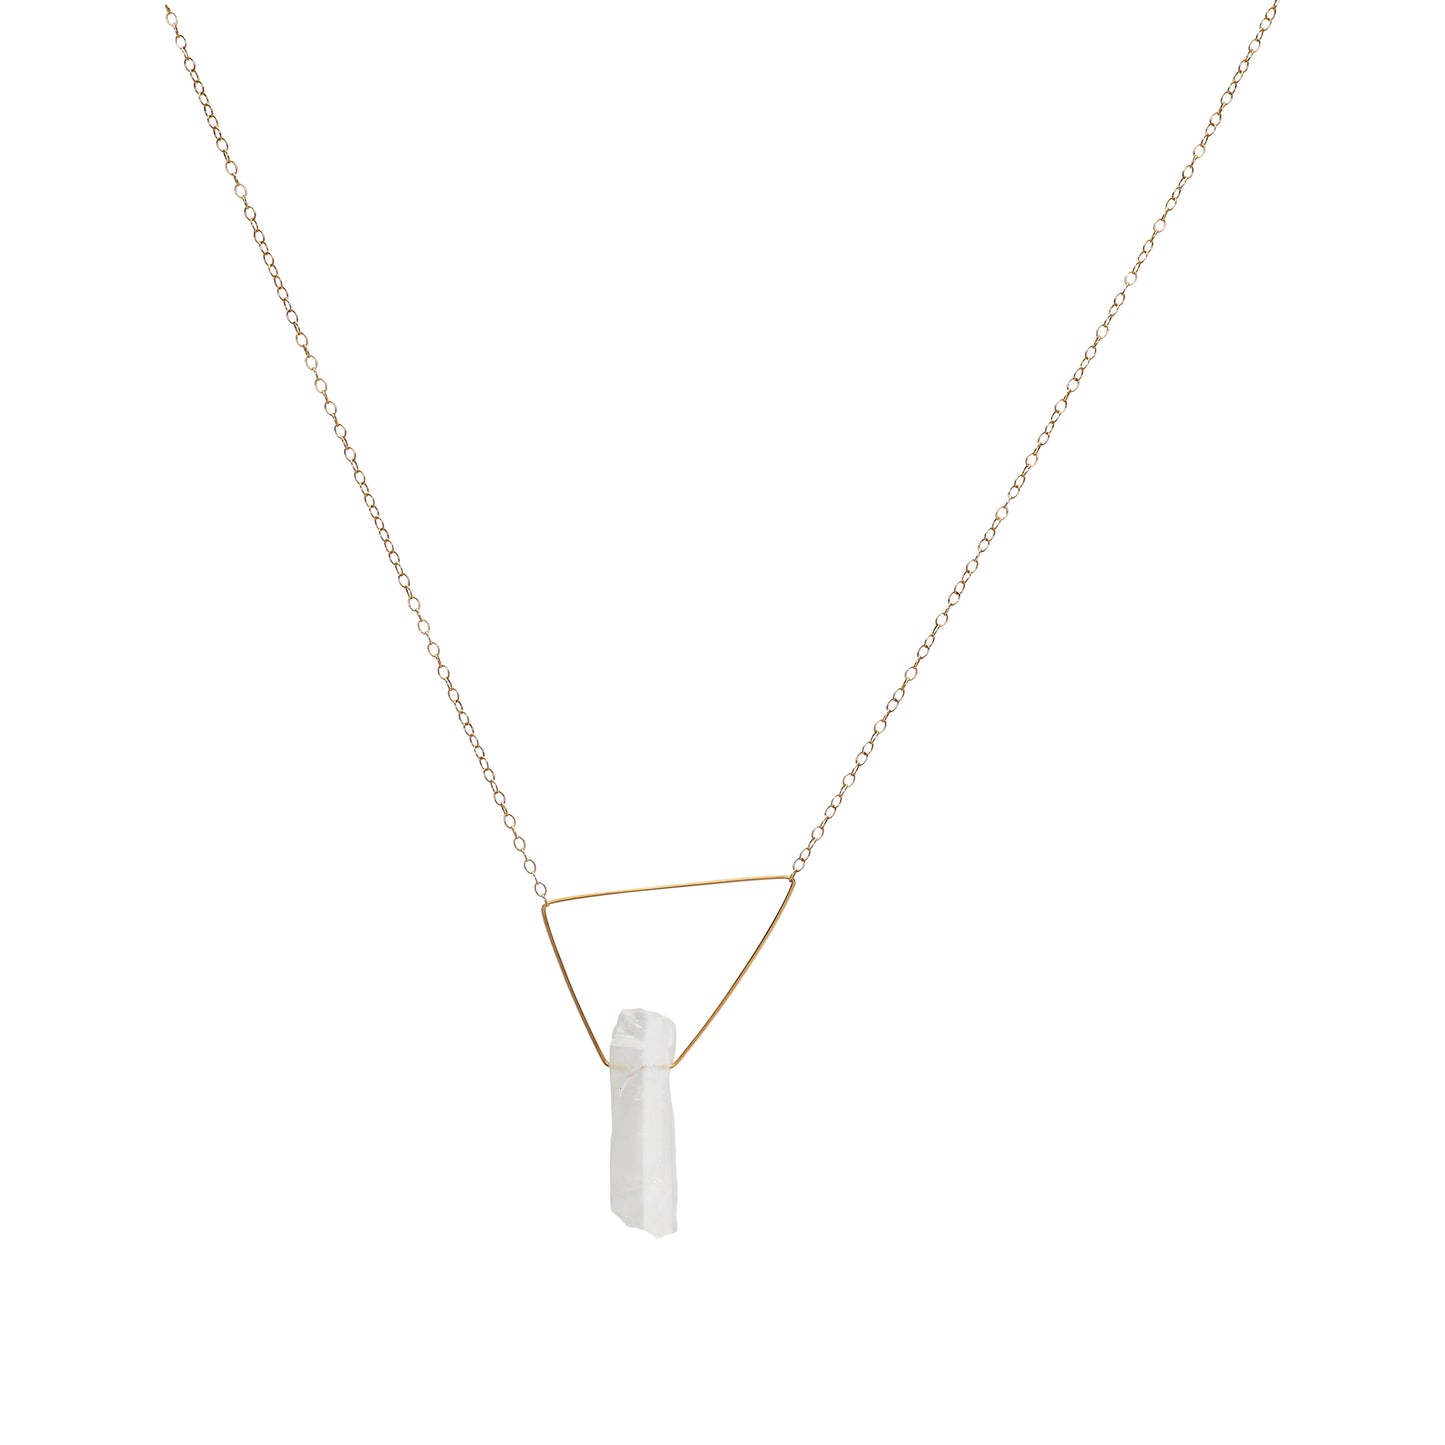 Triangle Necklace with White Quartz